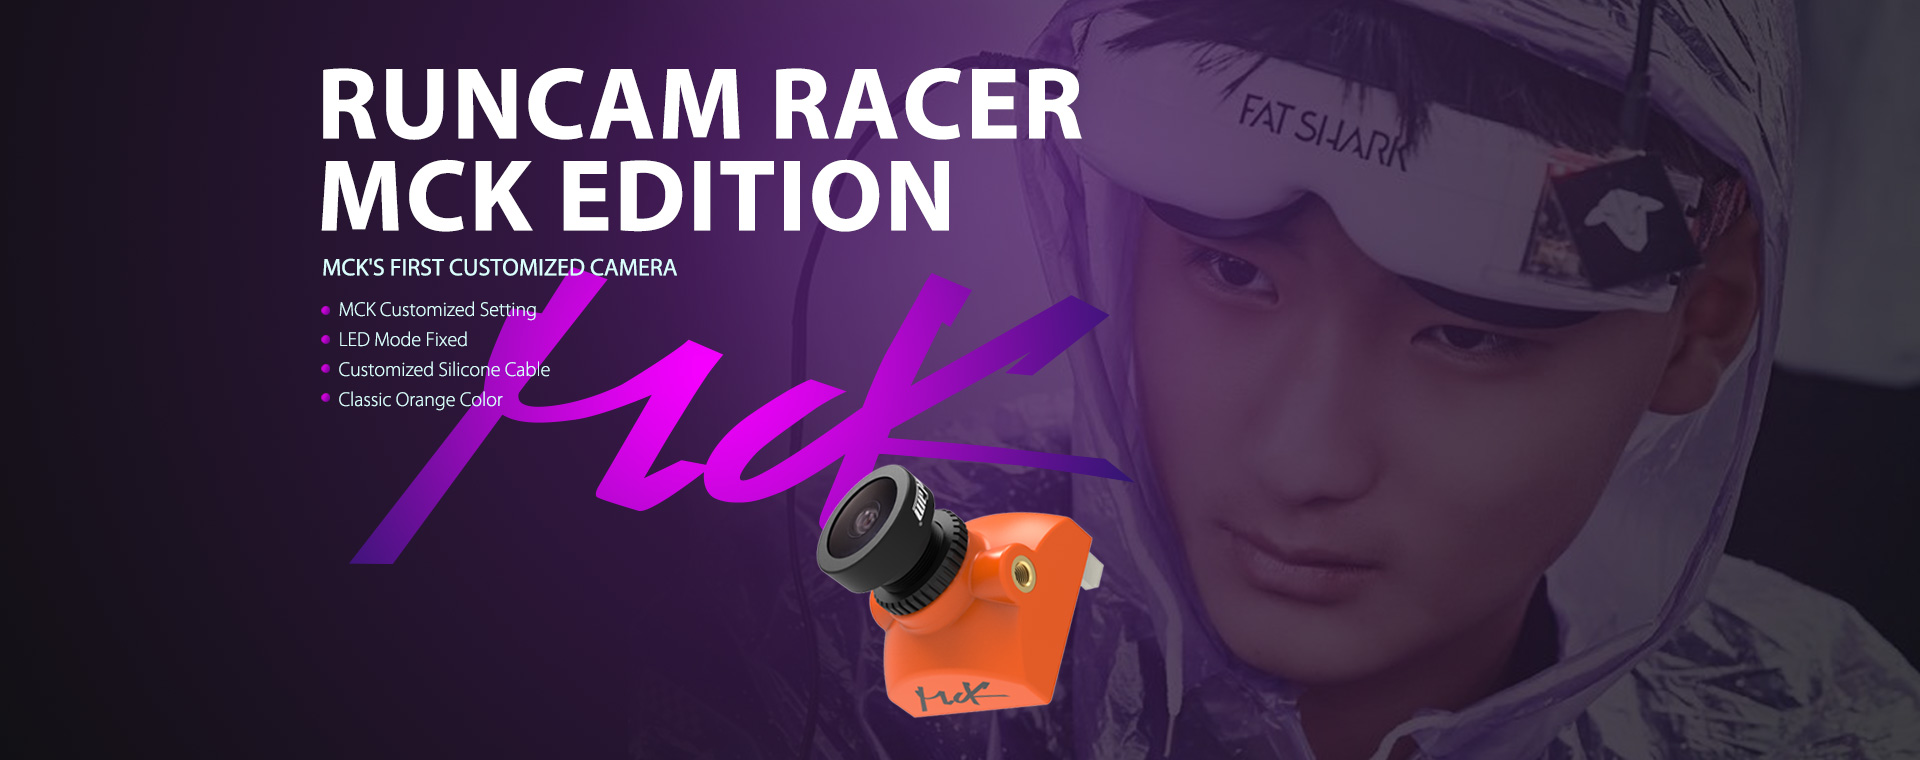 Runcam Racer MCK Edition